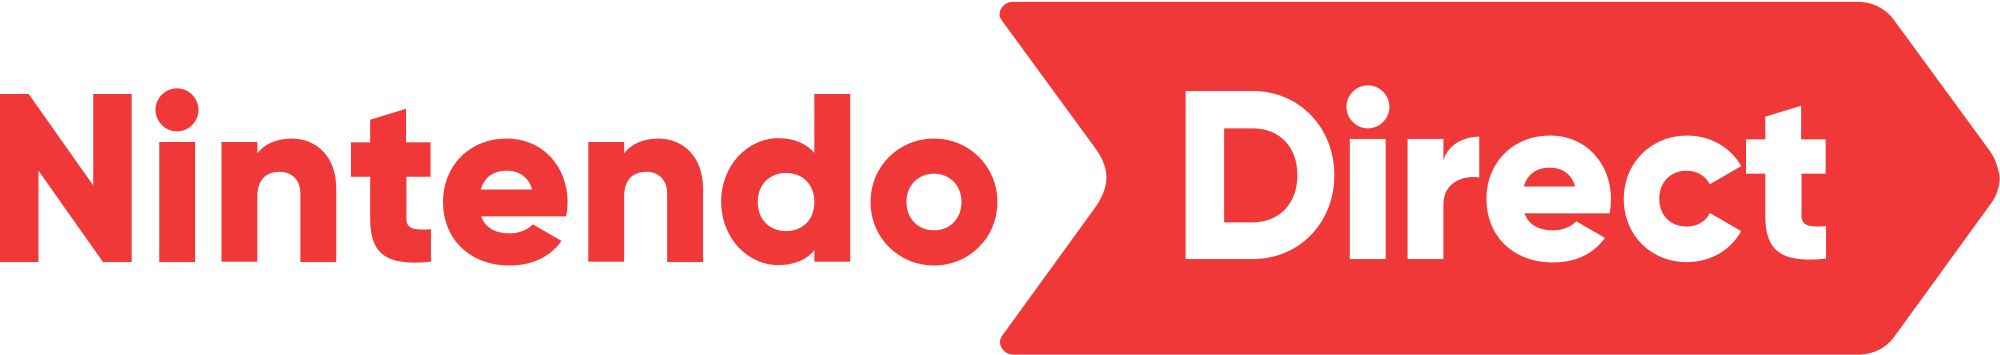 Logo Nintendo Direct